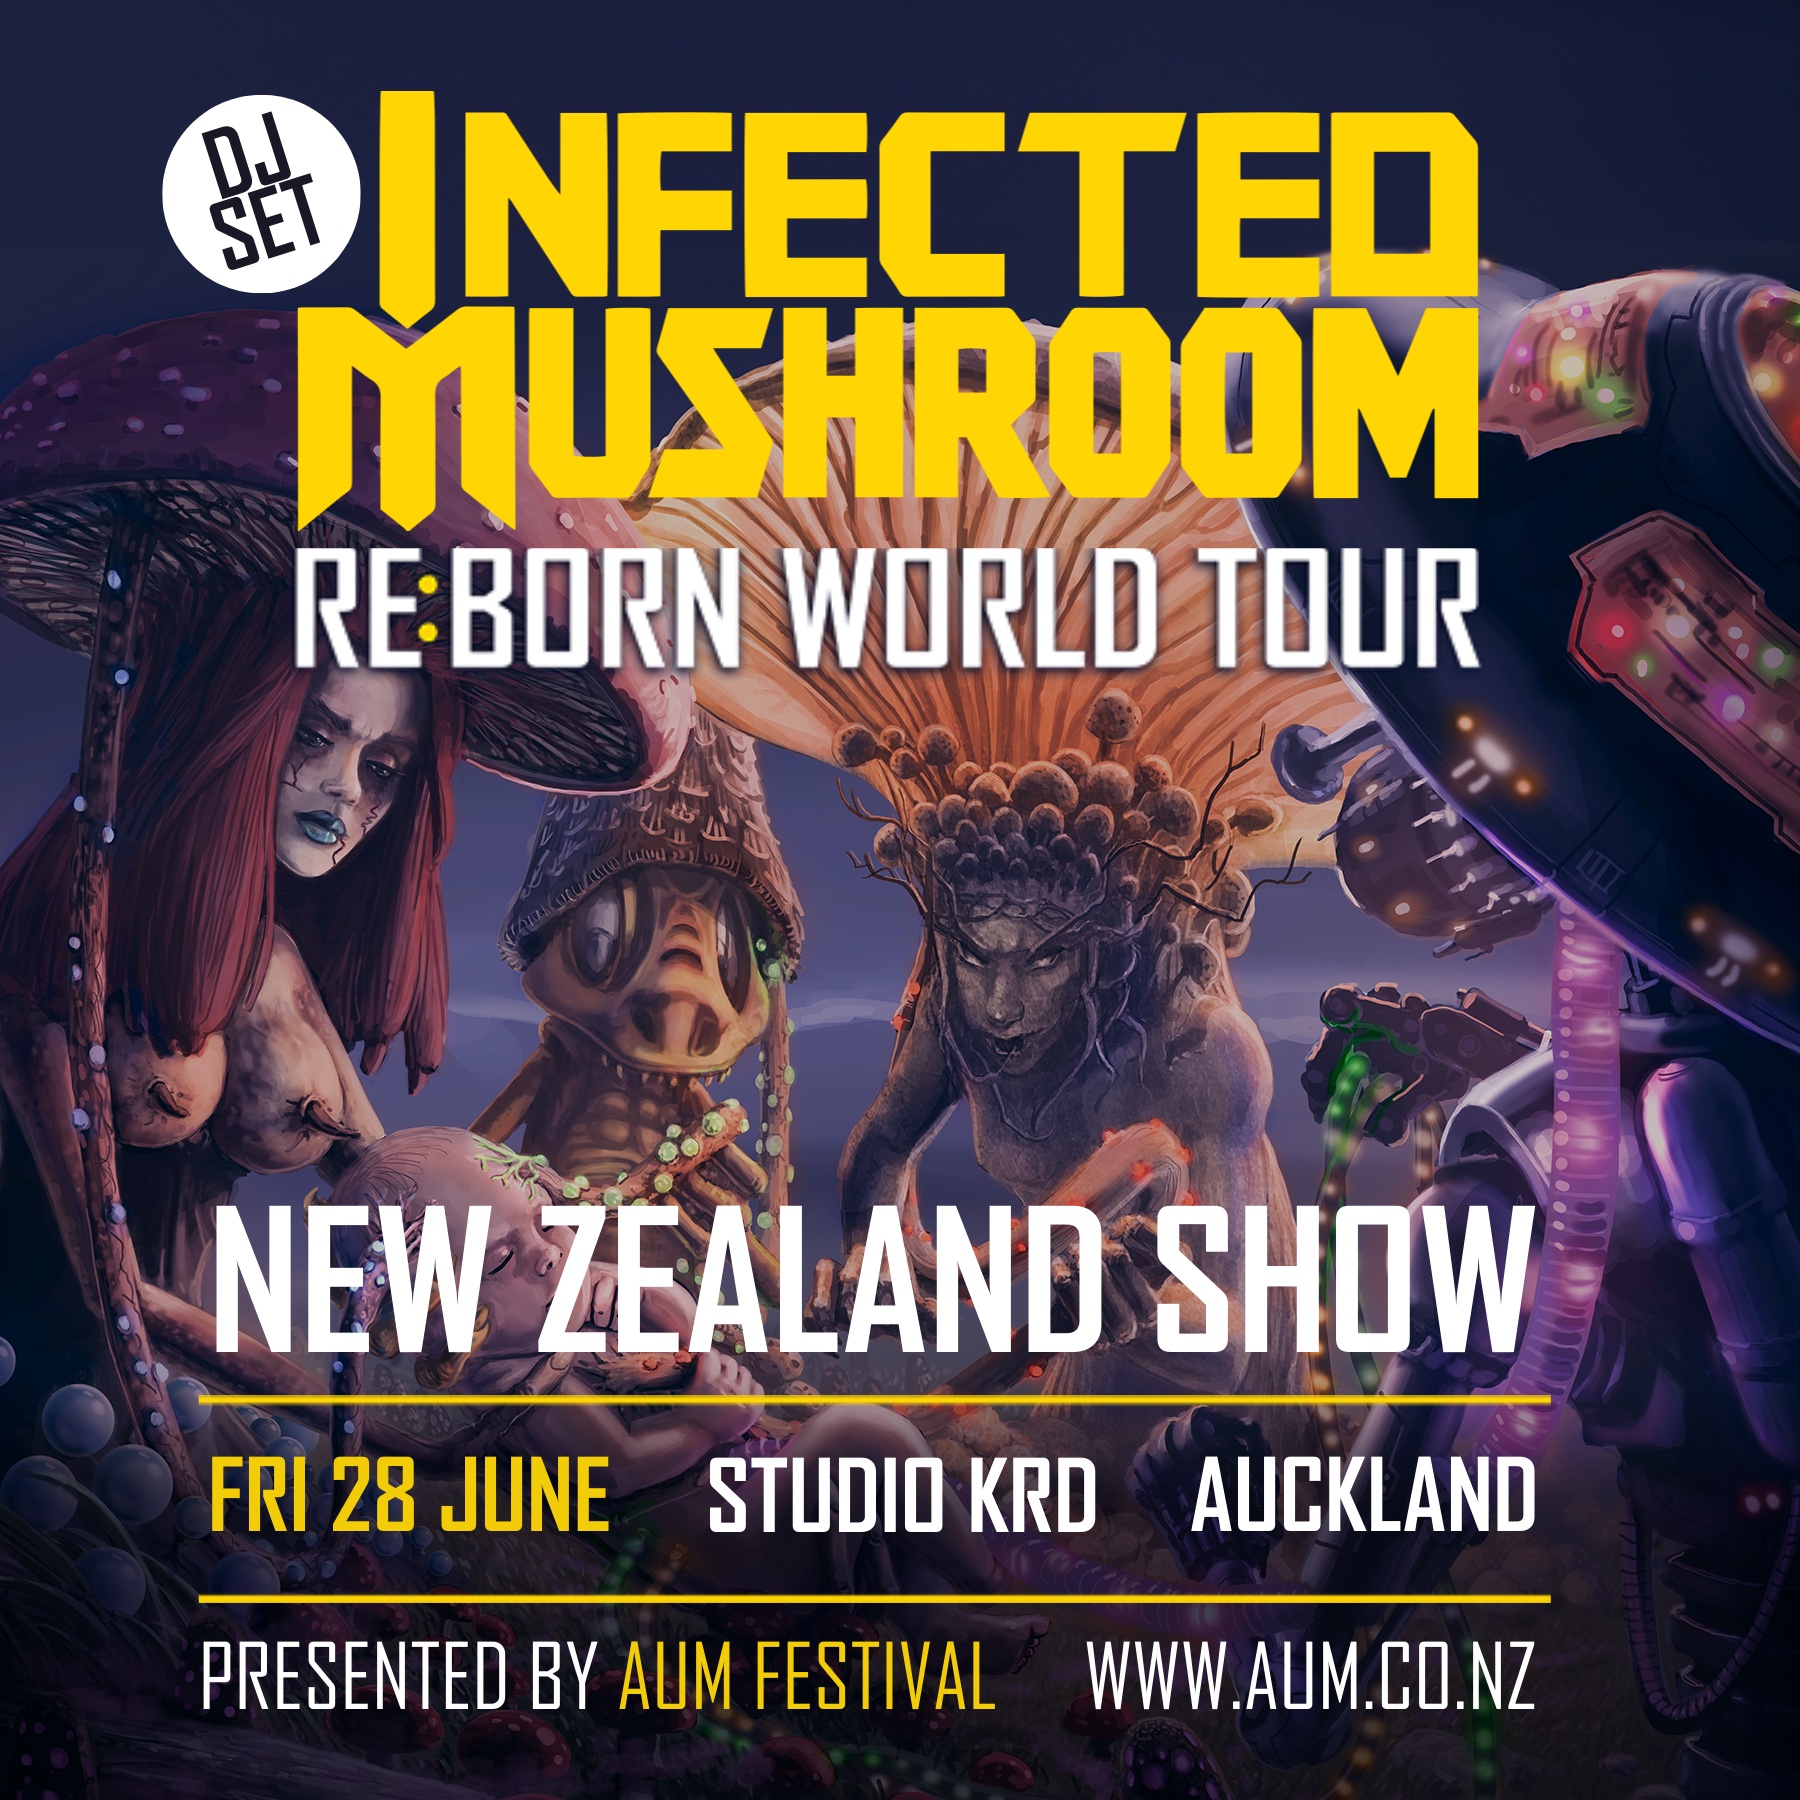 infected mushrooms tour